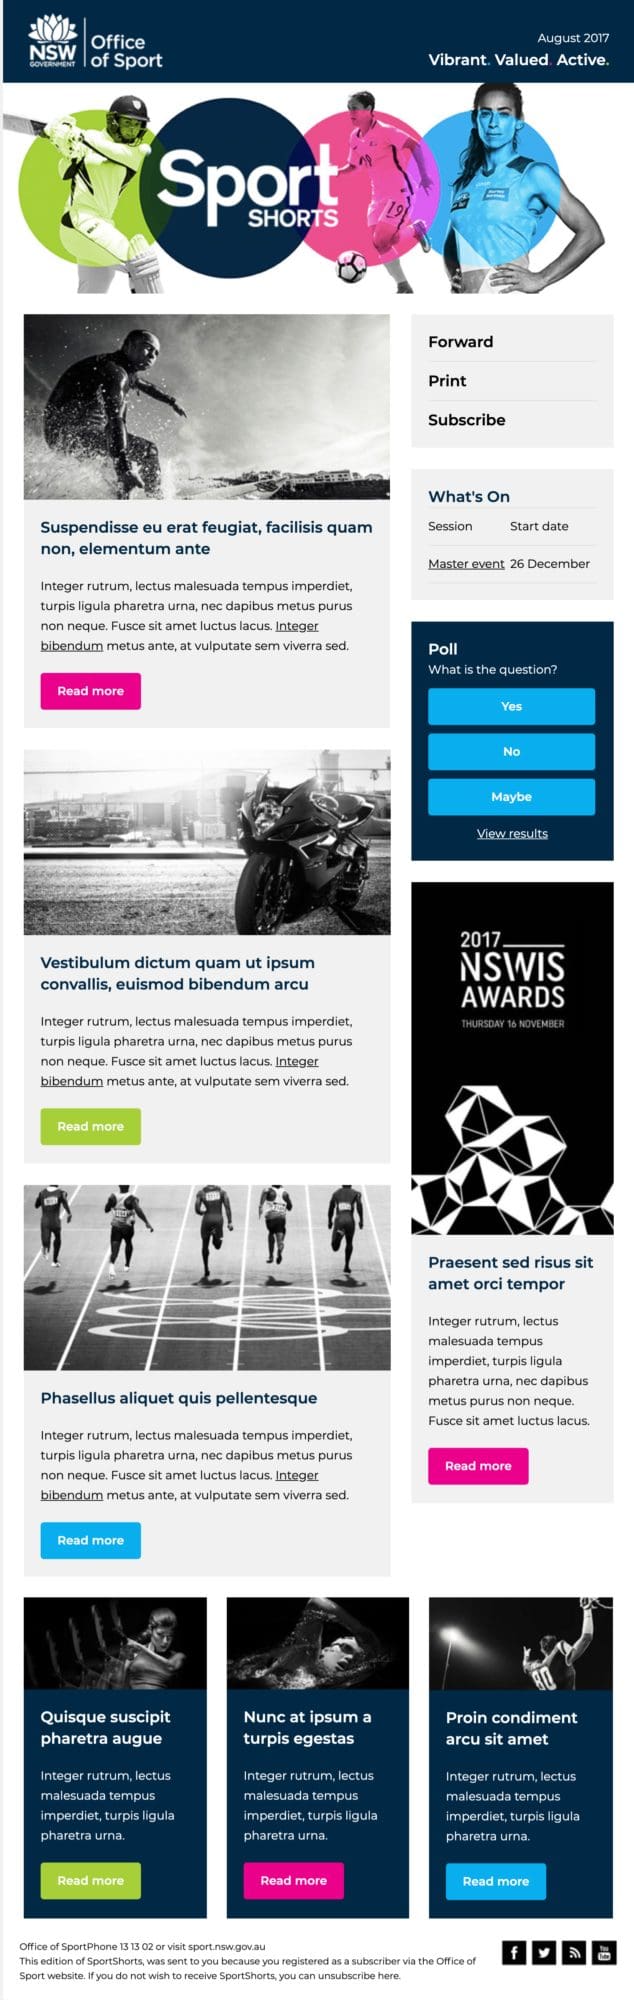 NSW office of sport Newsletter